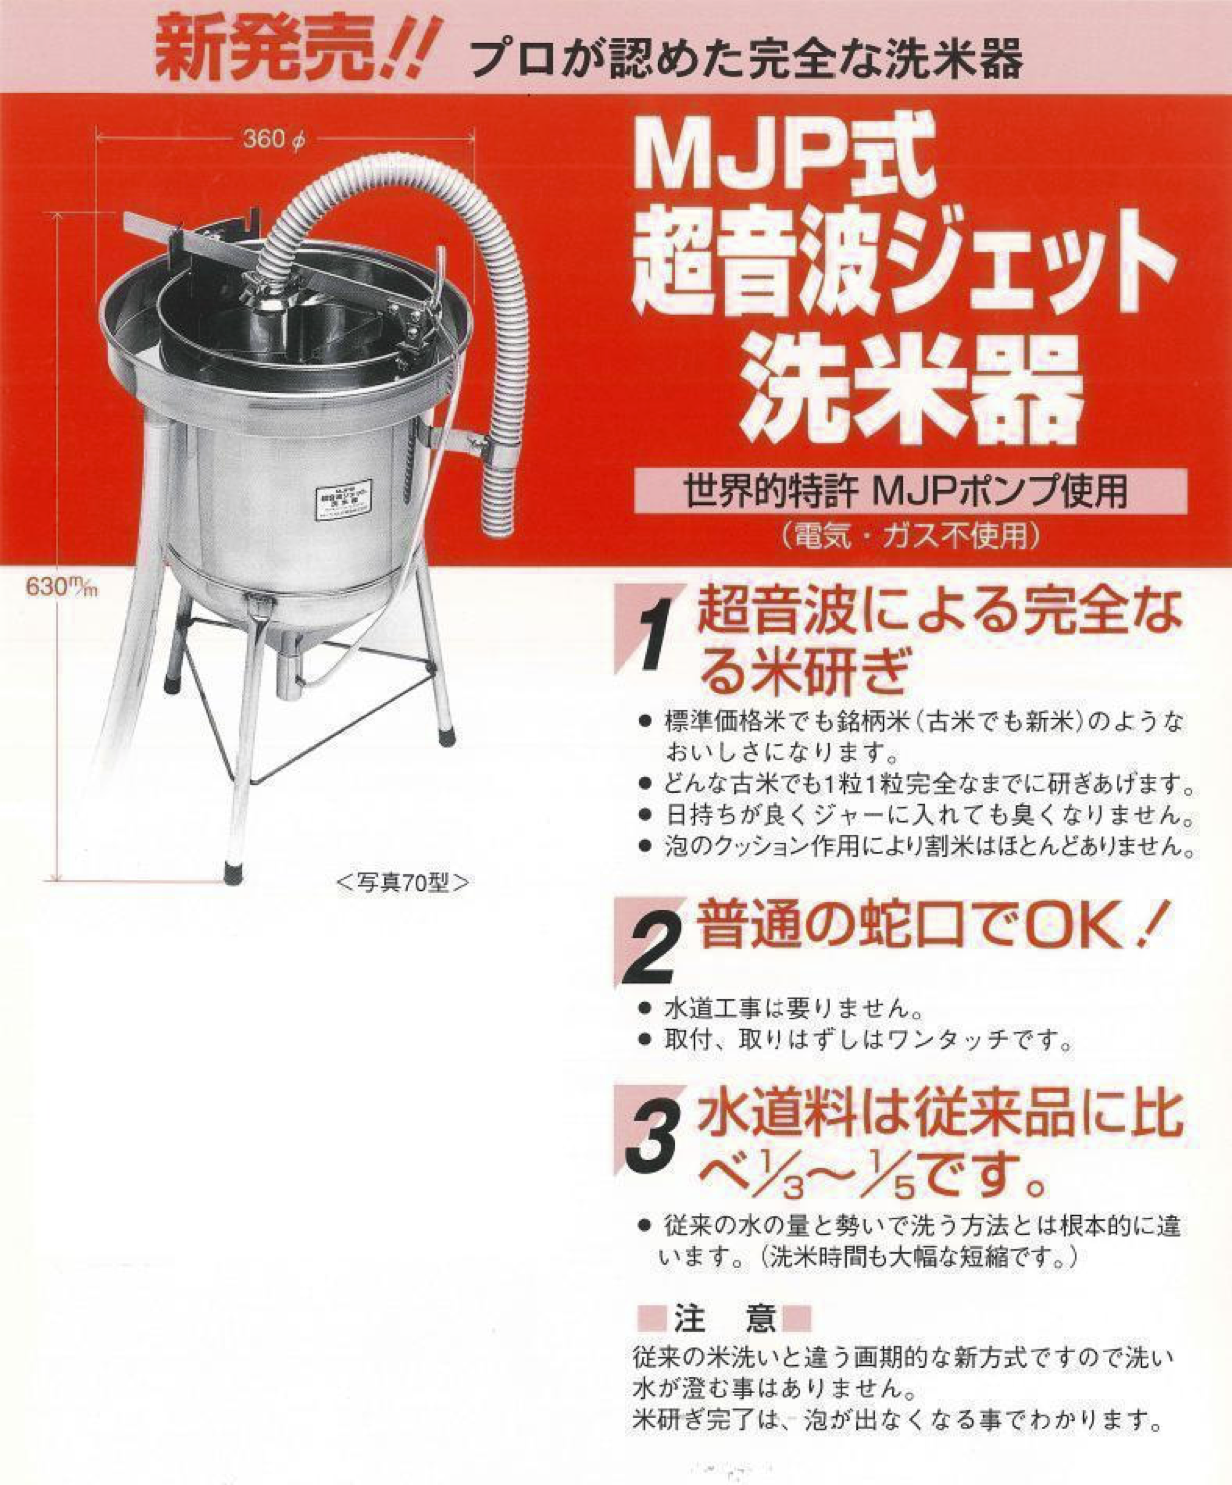 KOME-70 MJP式超音波ジェット洗米器 | 寿司ロボットの株式会社トップ 